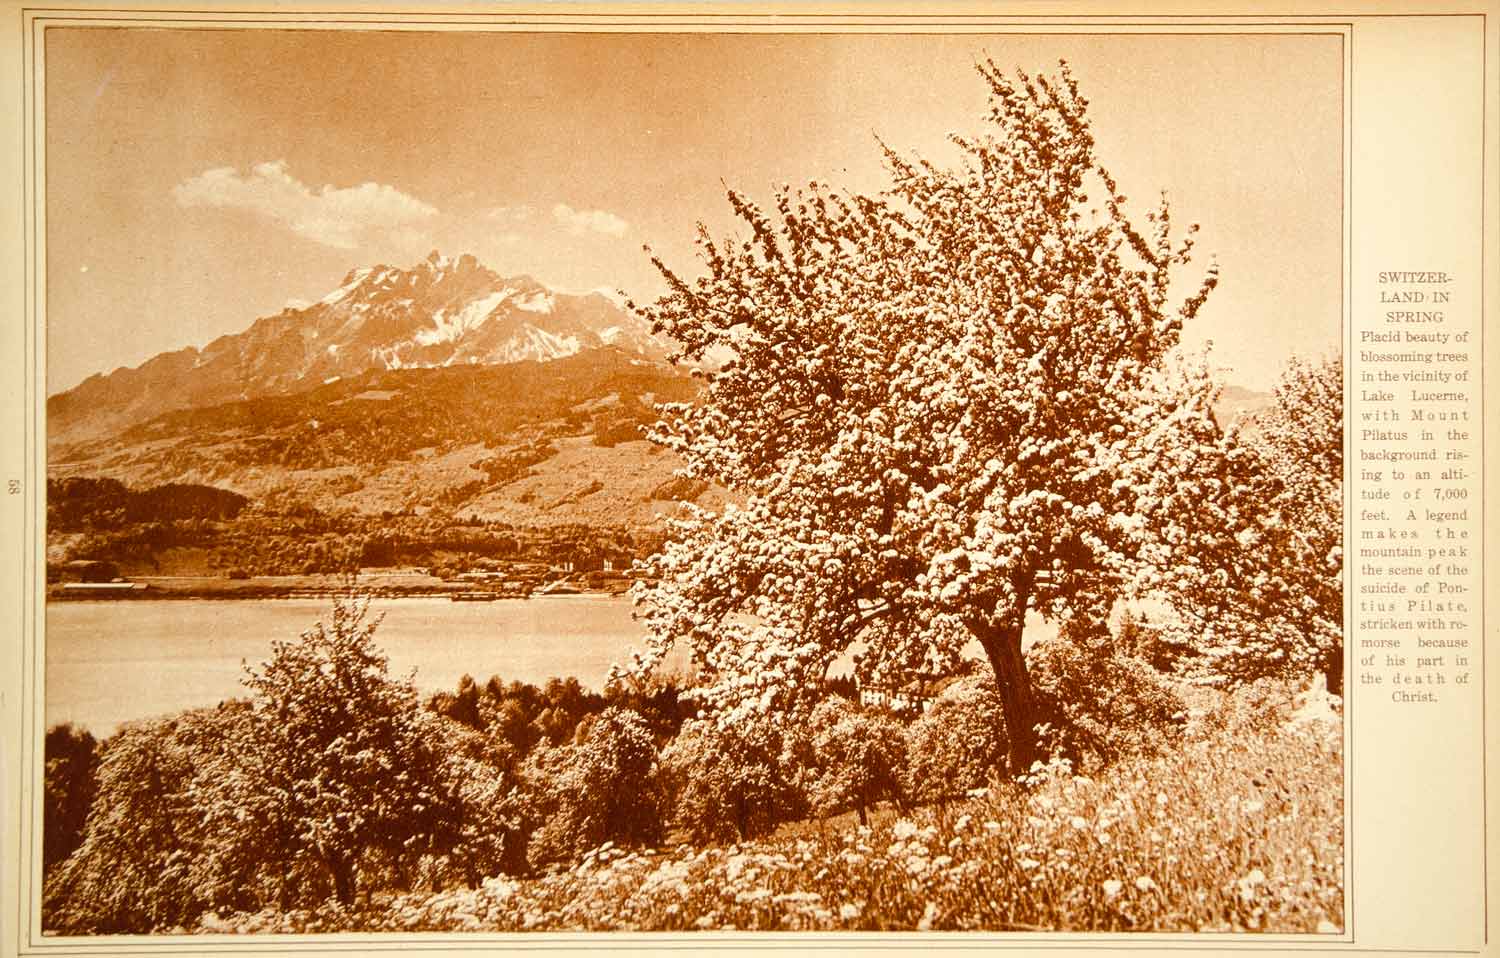 1923 Rotogravure Lake Lucerne Mount Pilatus Switzerland Landscape Springtime